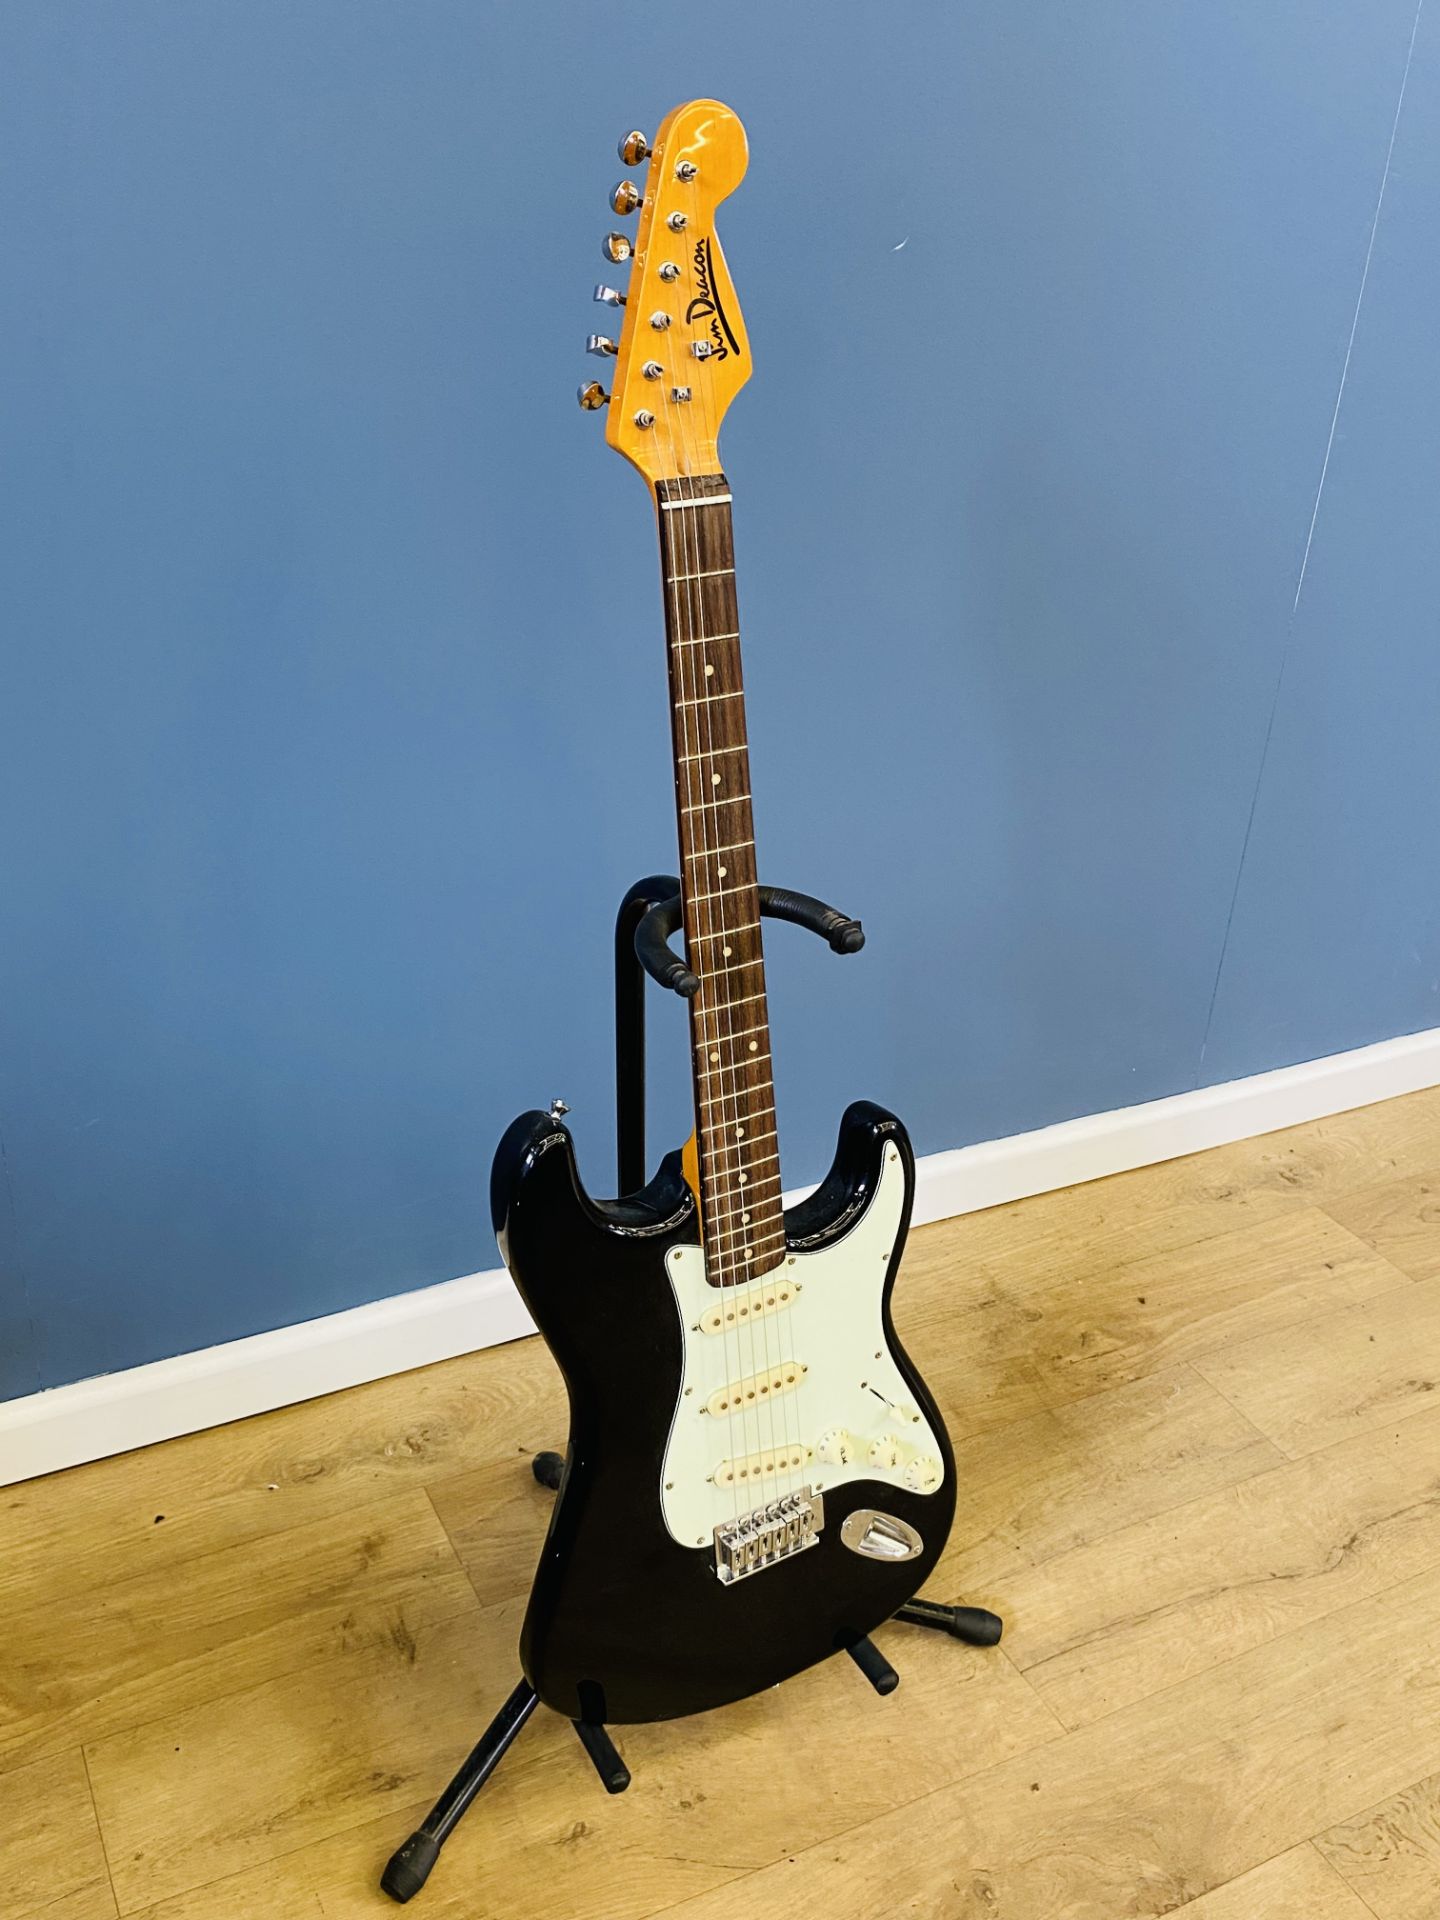 Jim Deacon Stratocaster style electric guitar